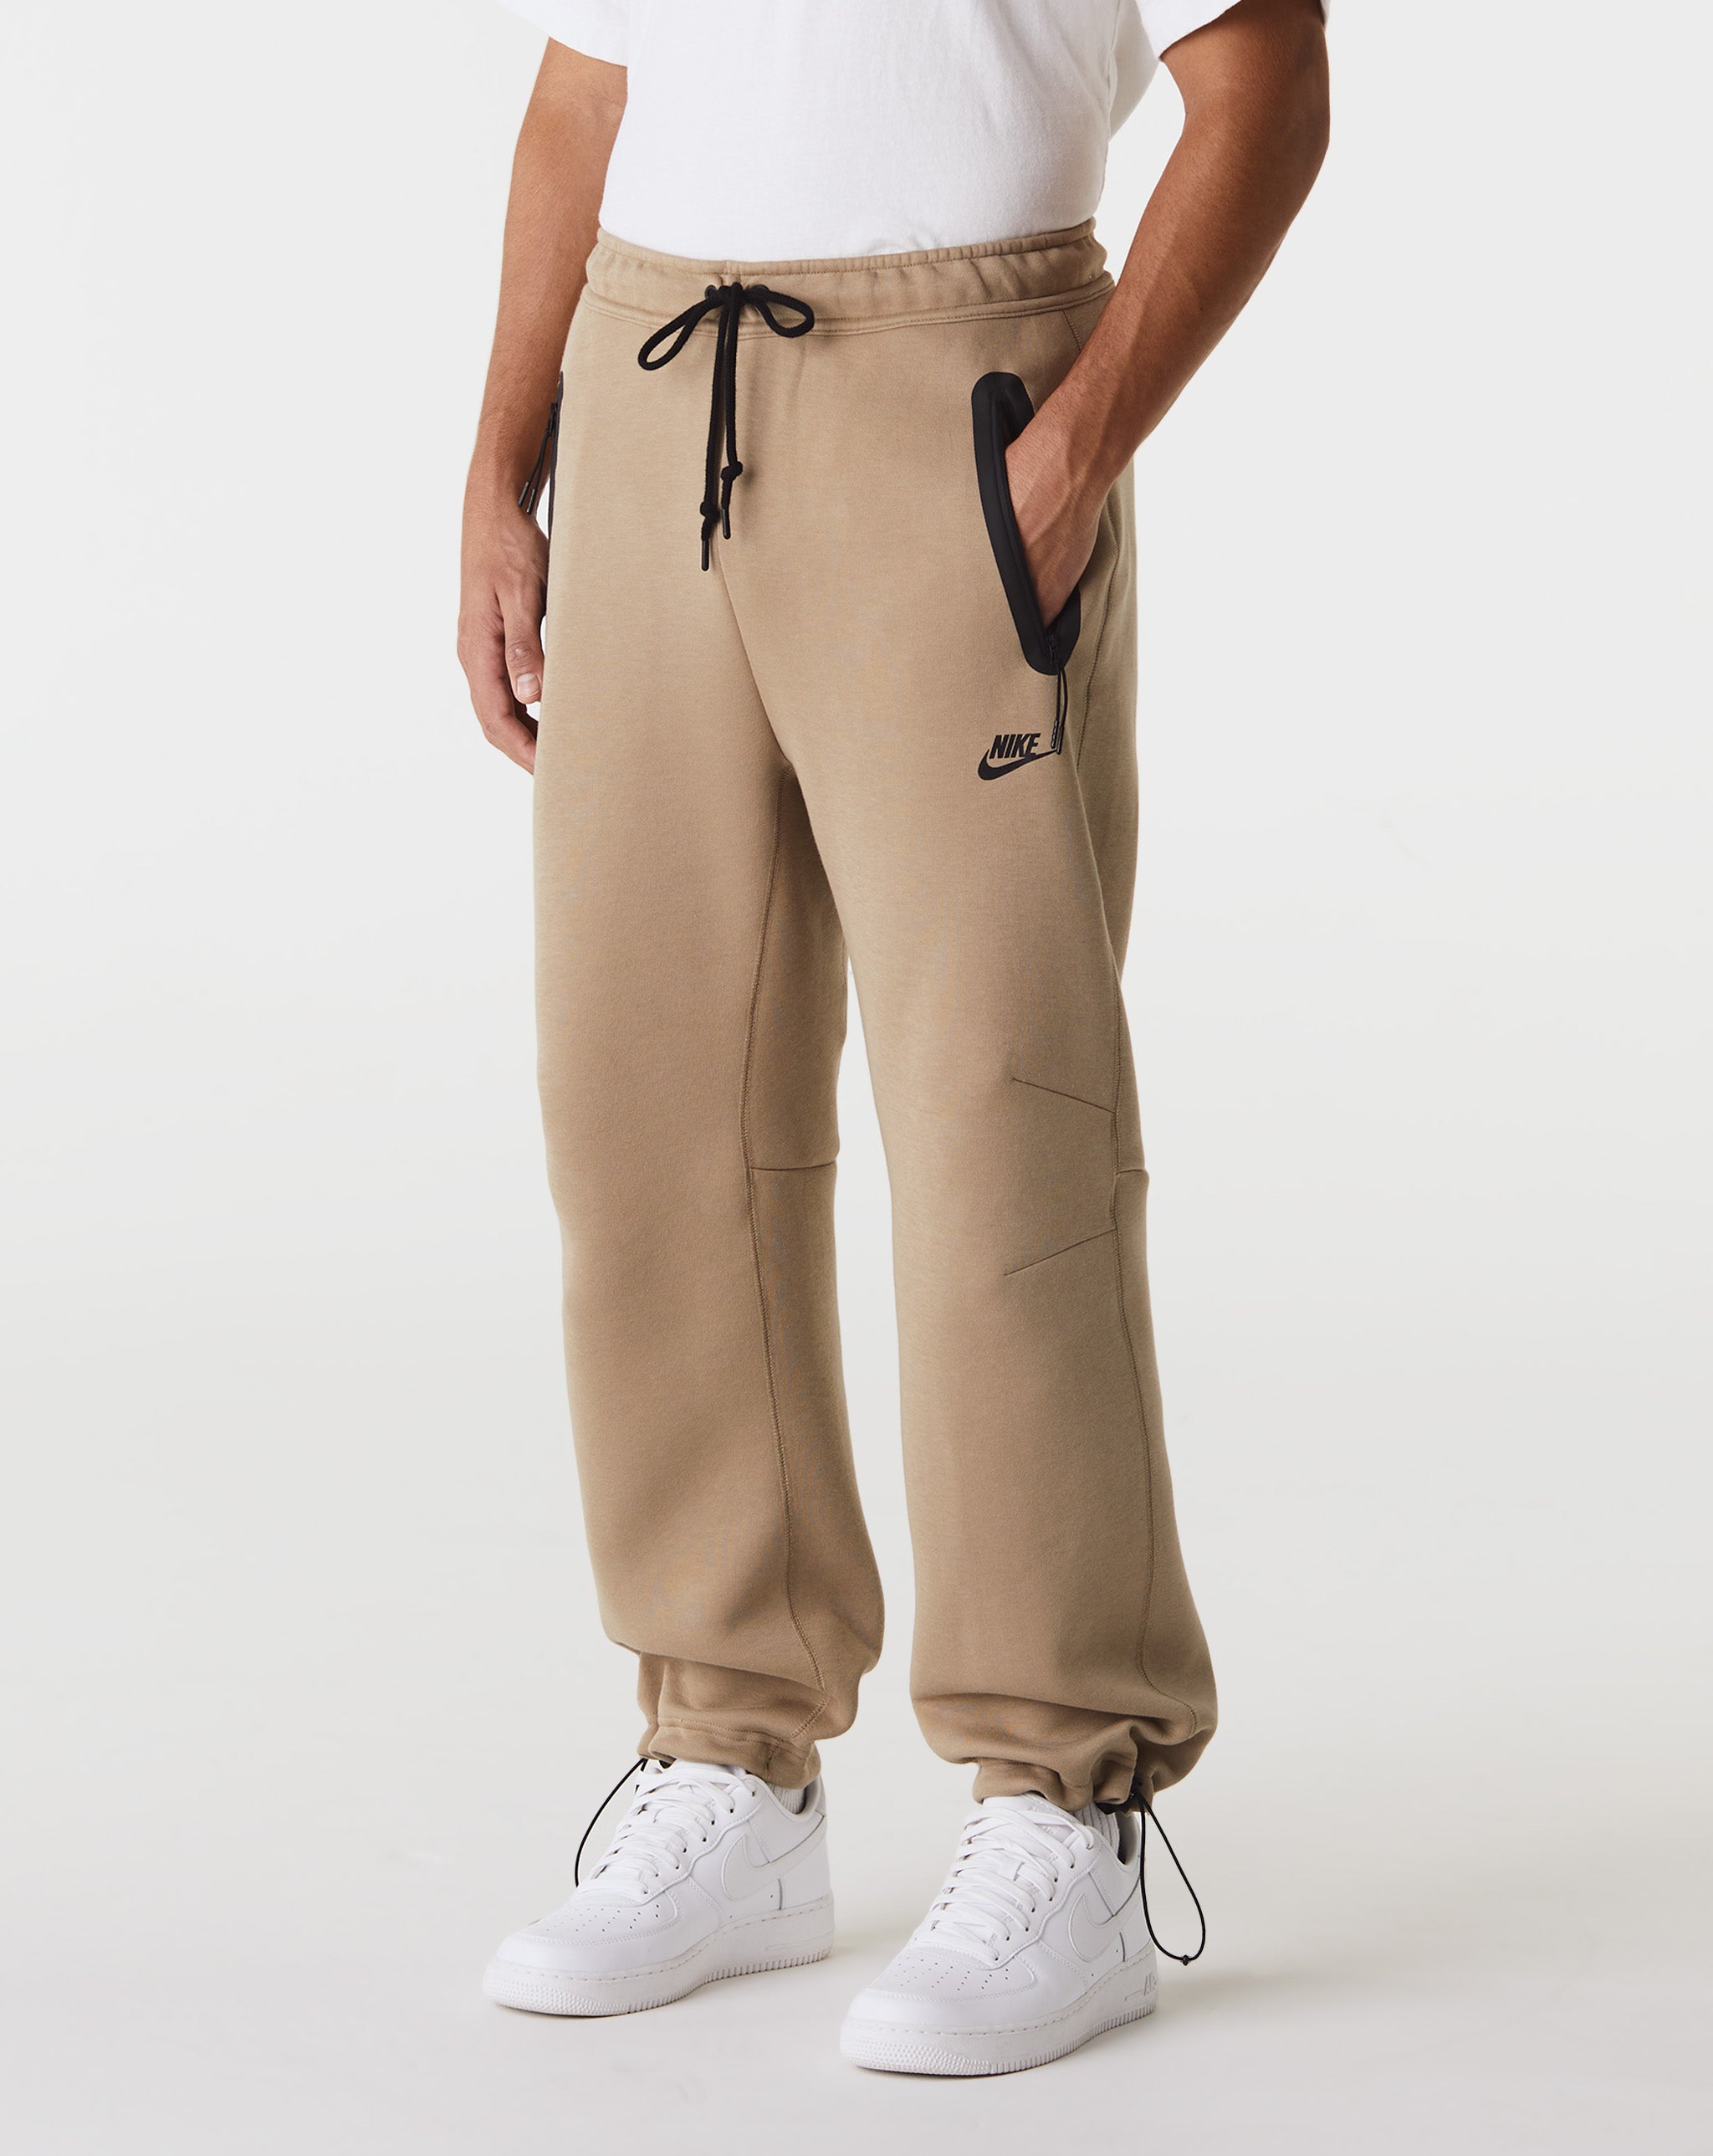 Nike Cheap Cerbe Jordan outlet x Layr Sweatpants  - Cheap Cerbe Jordan outlet